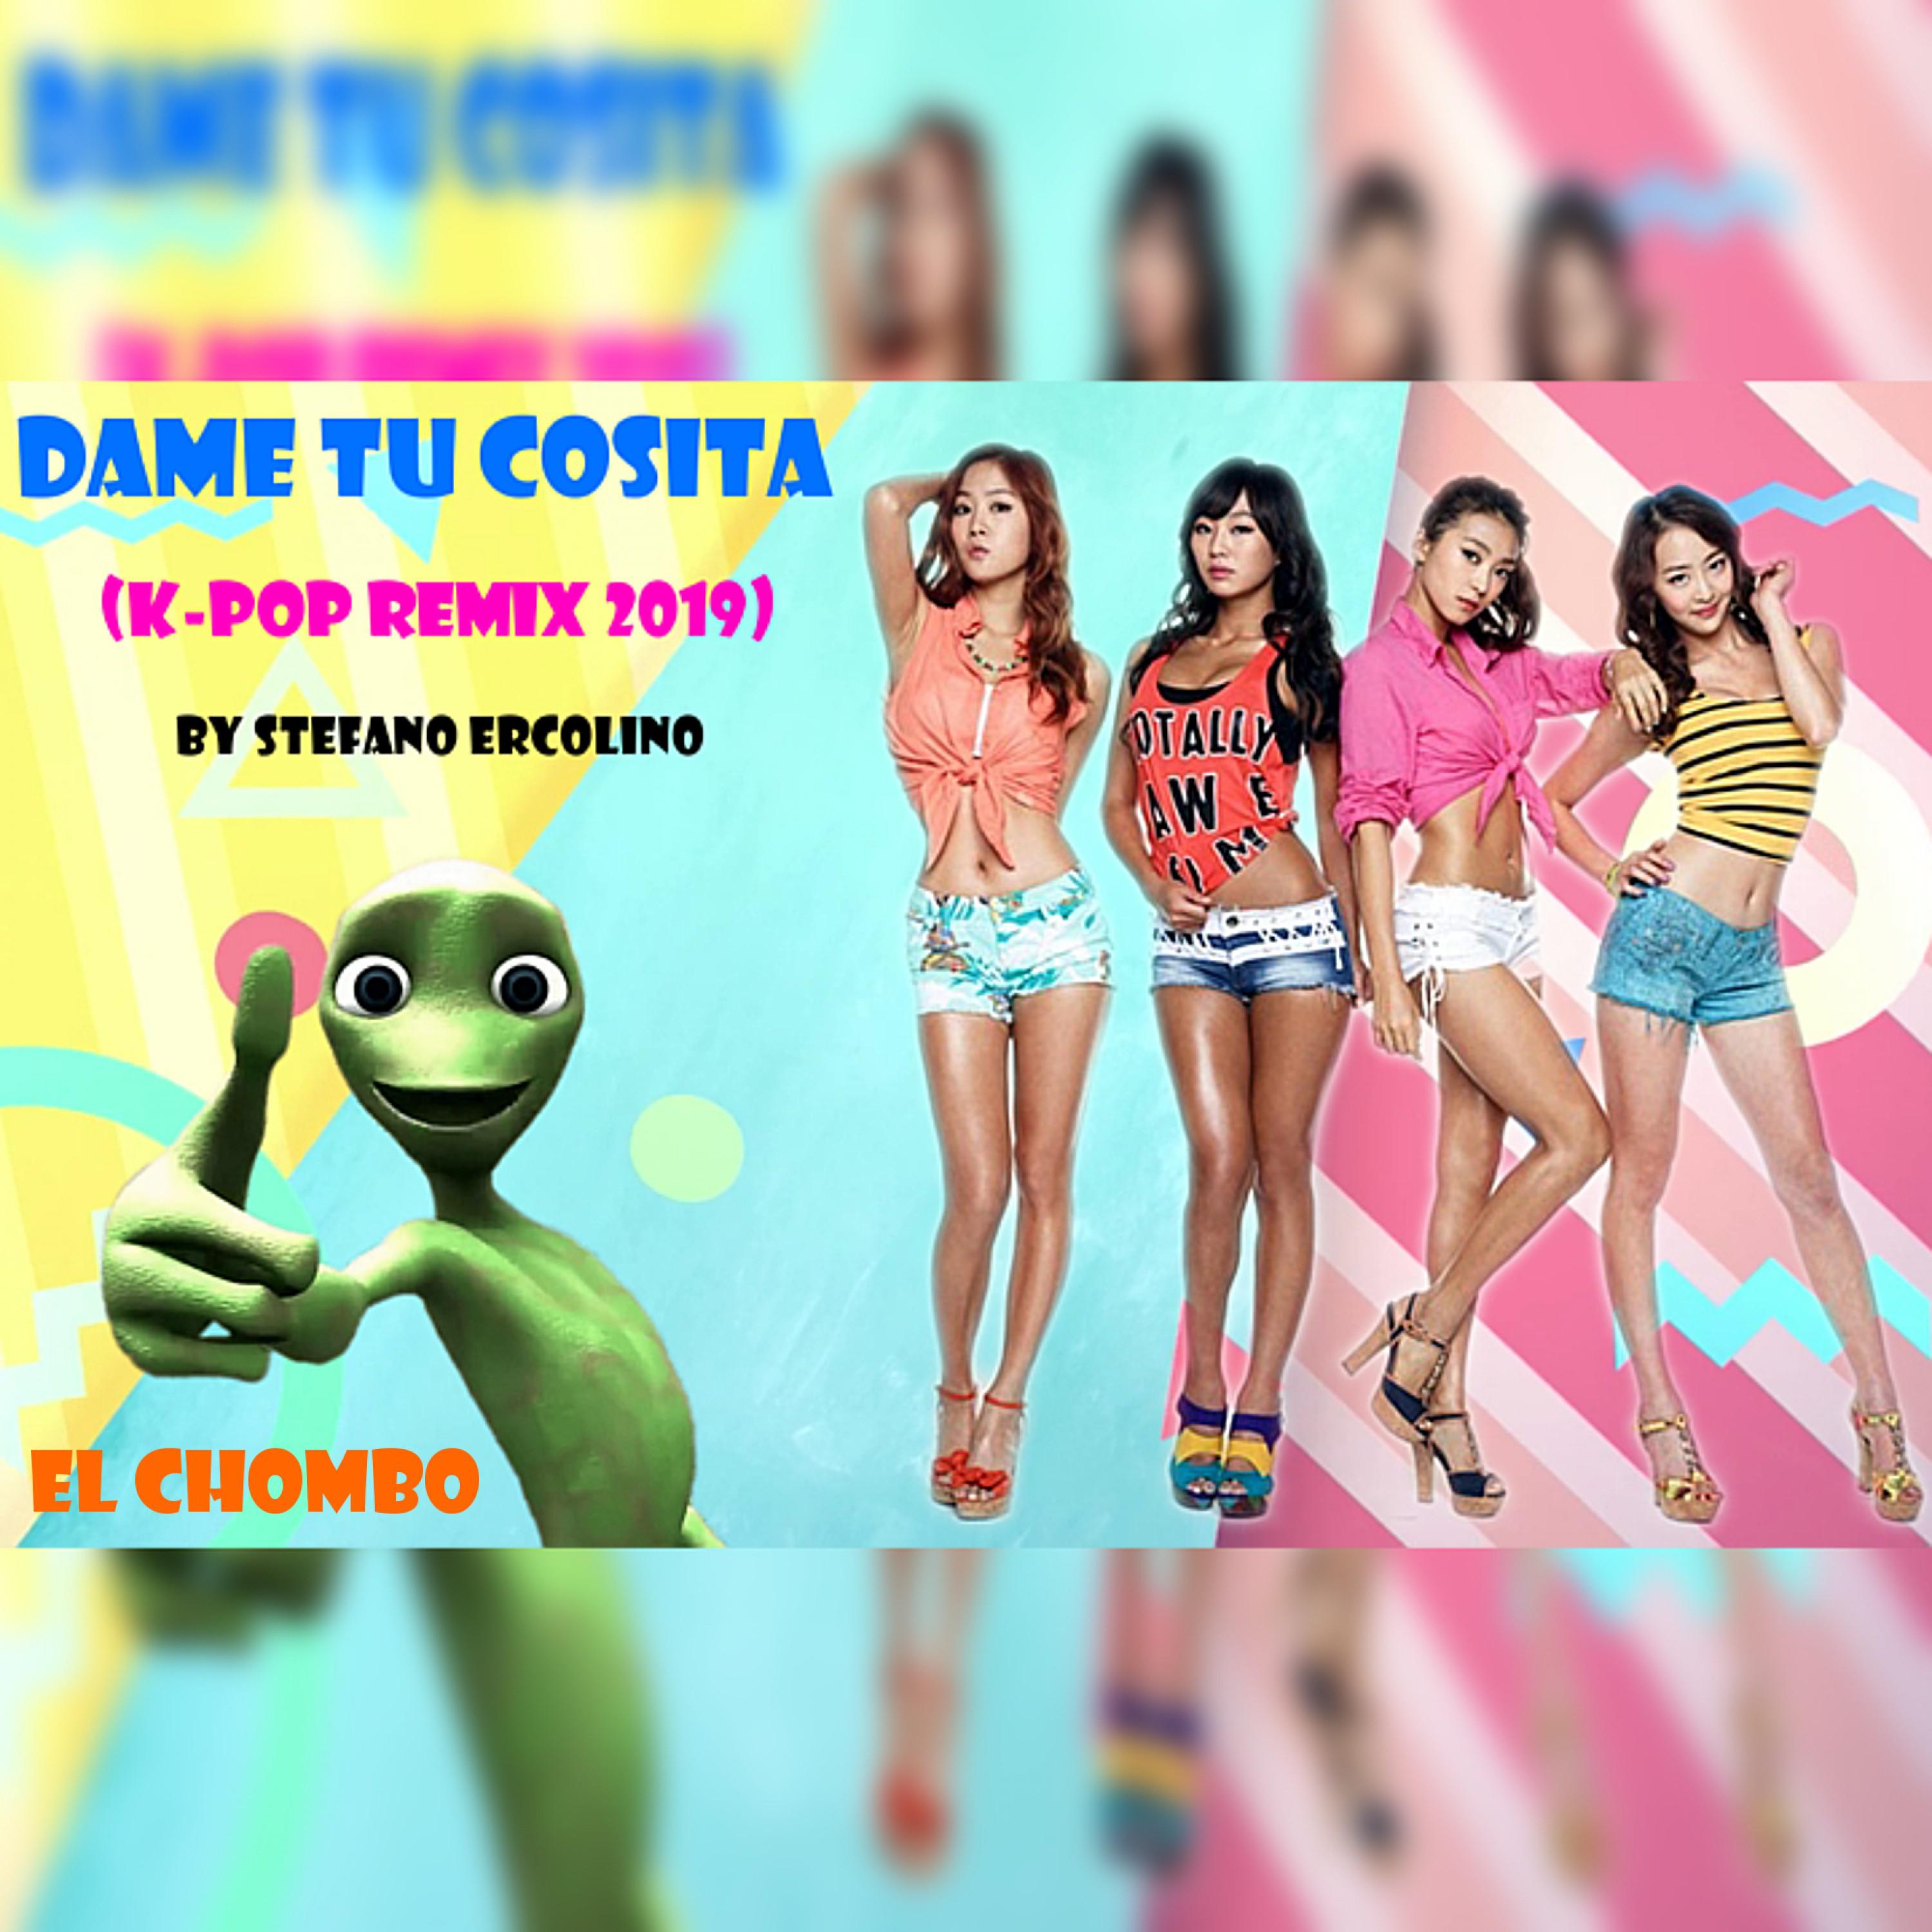 El Chombo - Dame Tu Cosita (K-Pop Remix 2019)